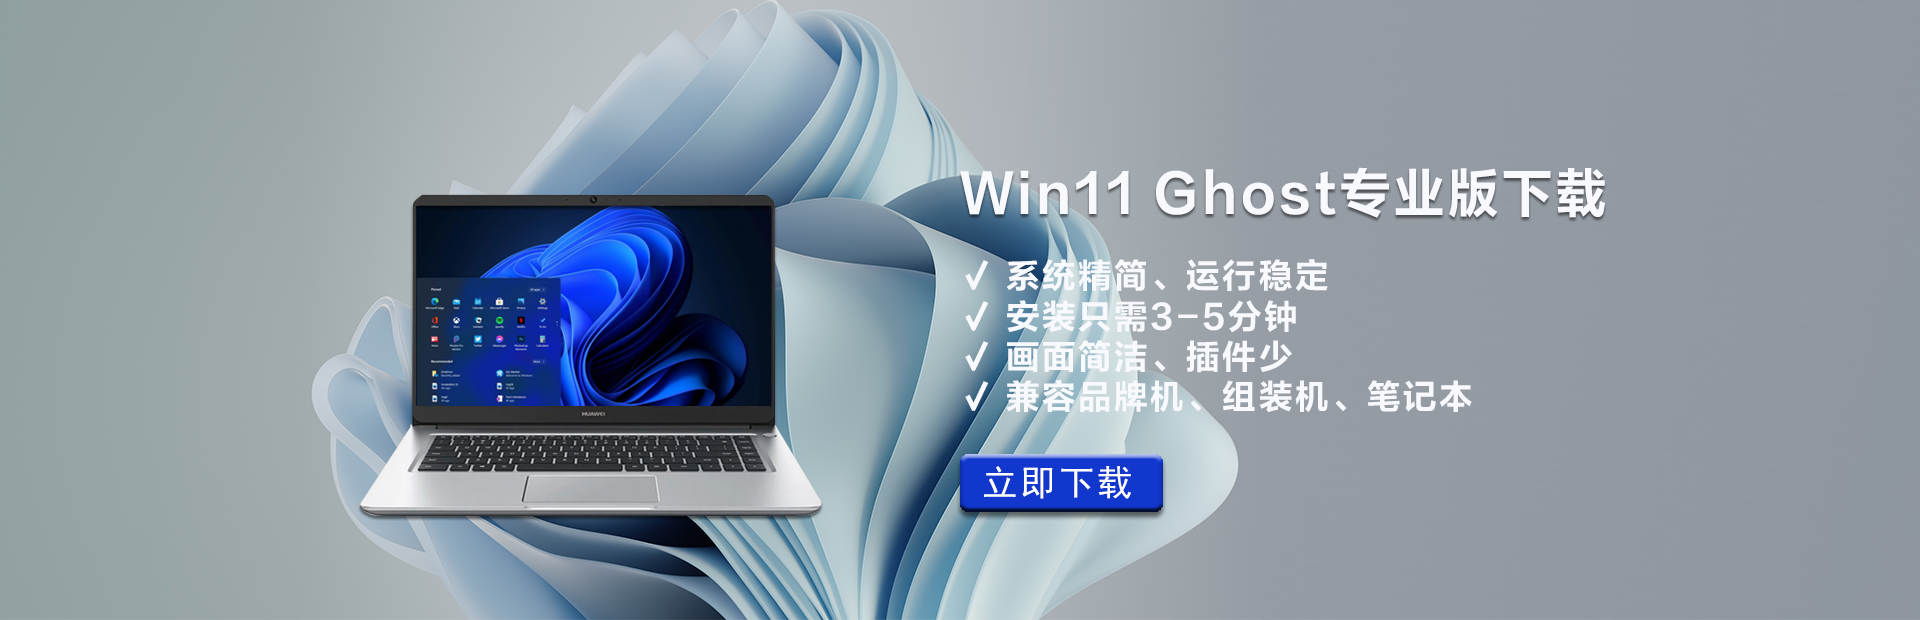 Win11 Ghost专业版下载